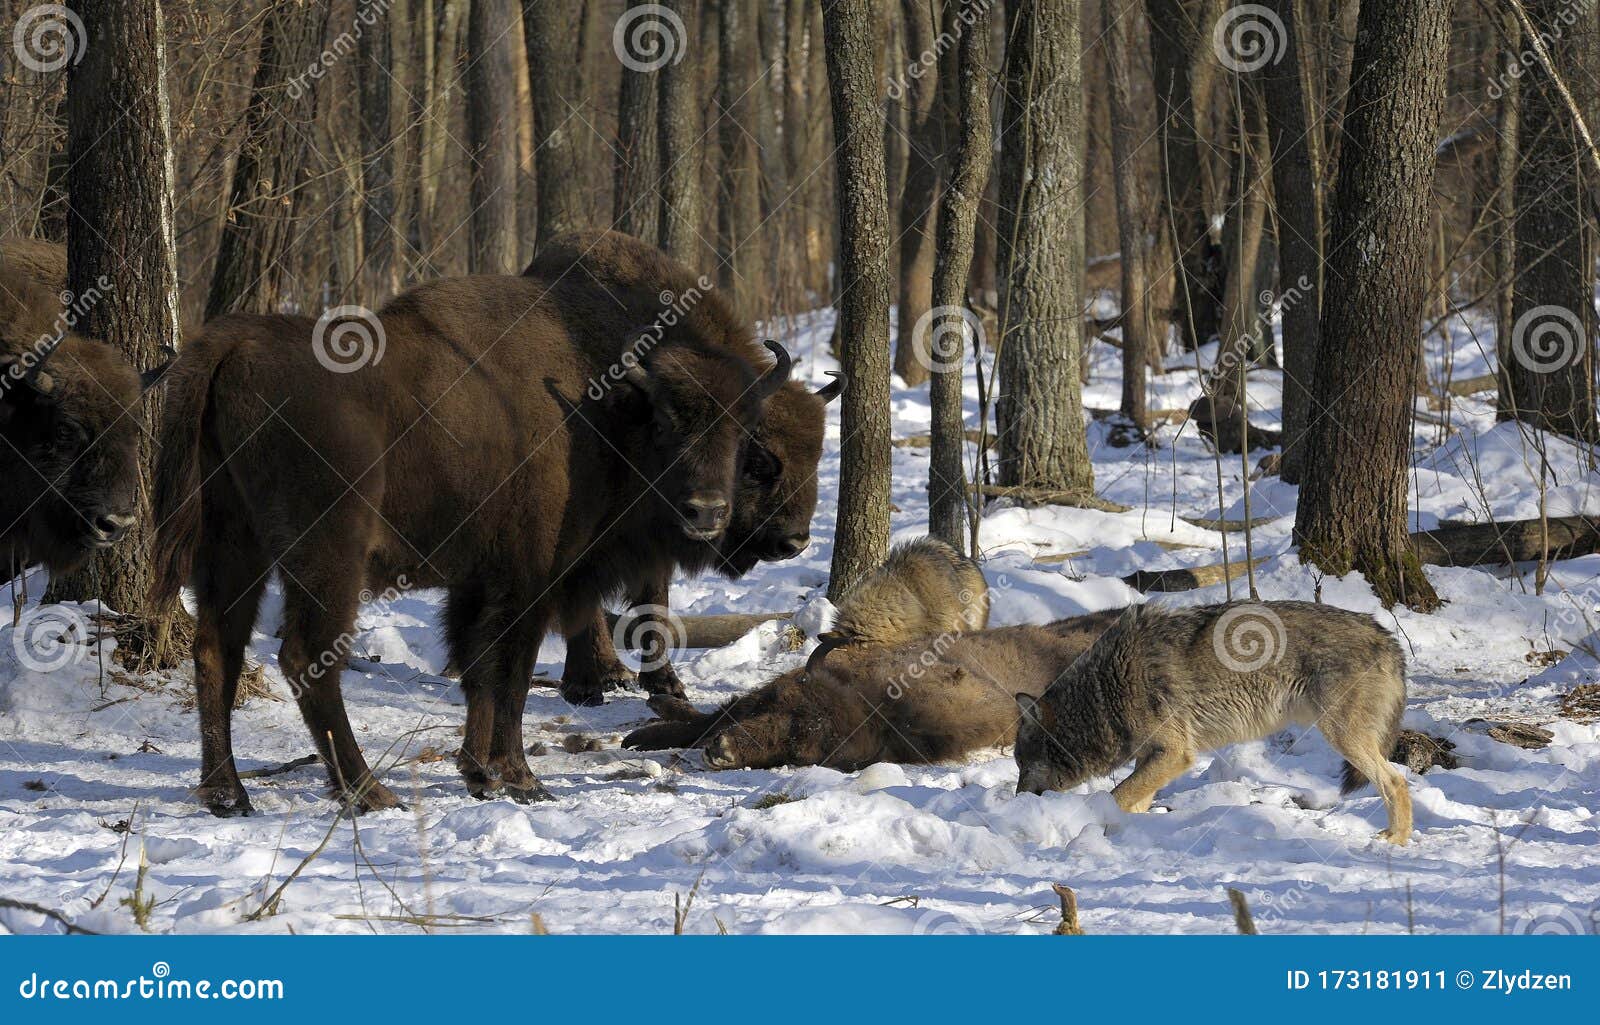 Pack of Wolves Vs. Herd of European Bison Stock Image - Image of park